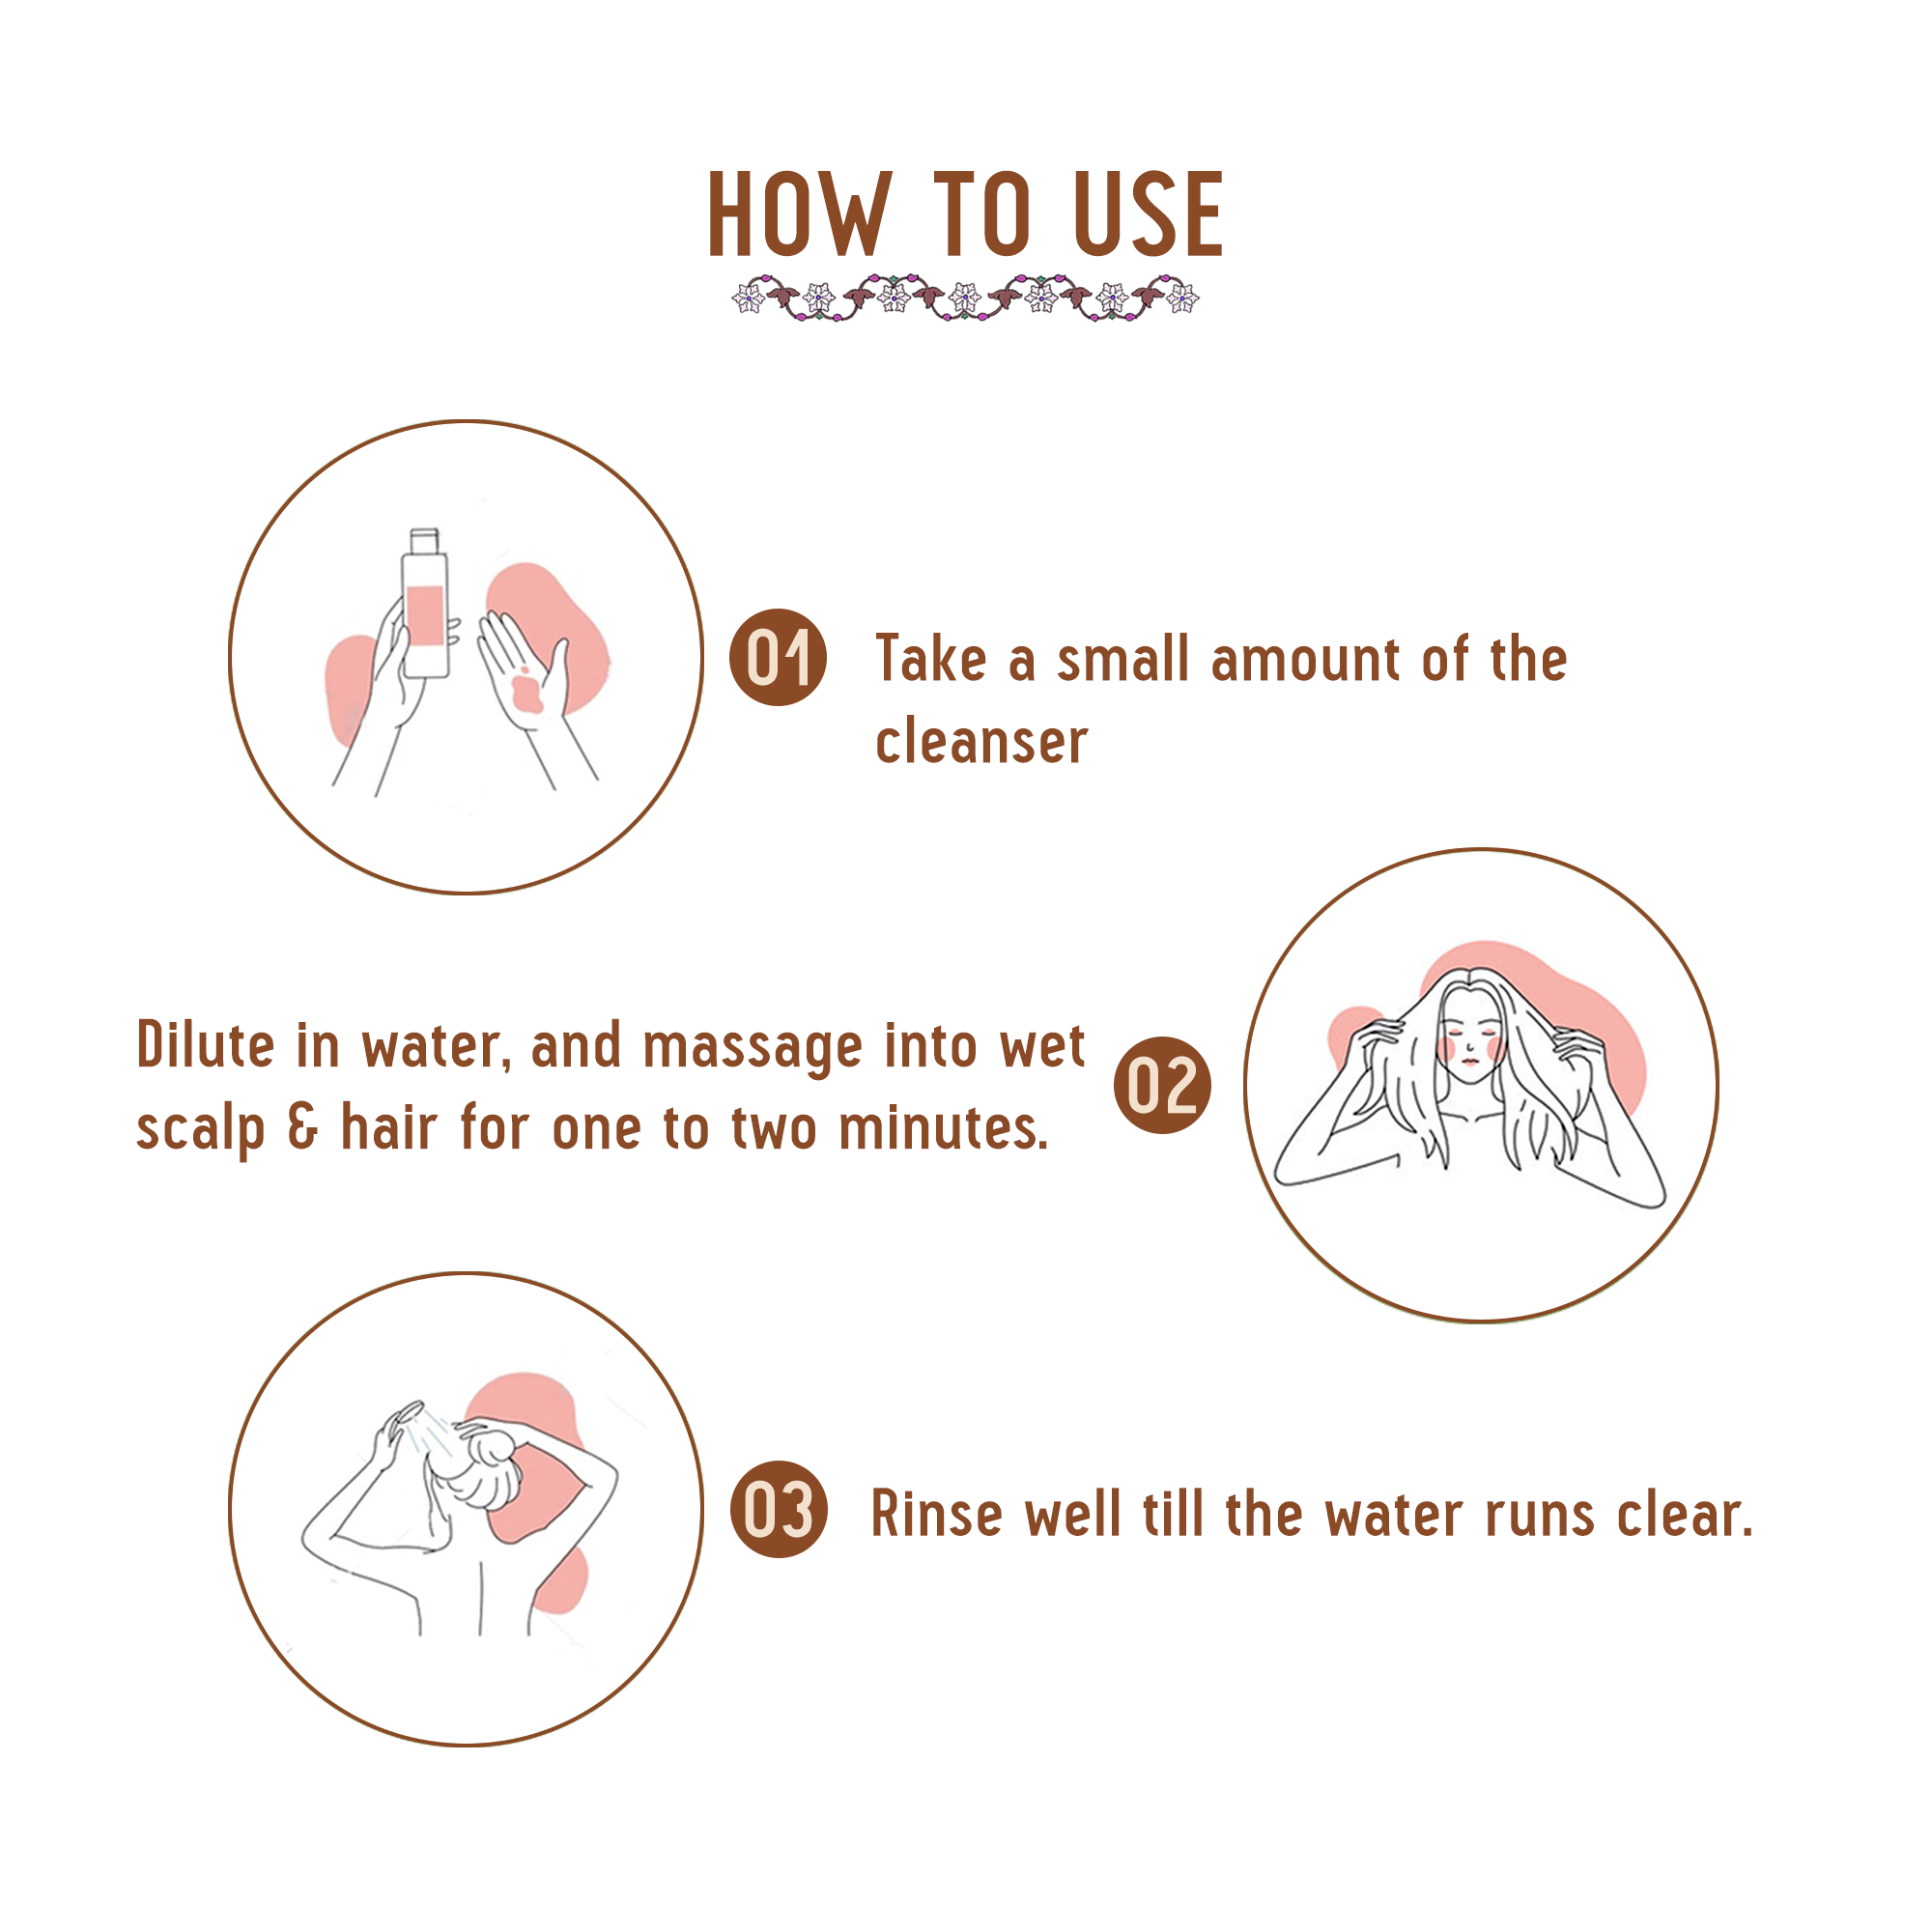 How to use shakuntala herbal shampoo